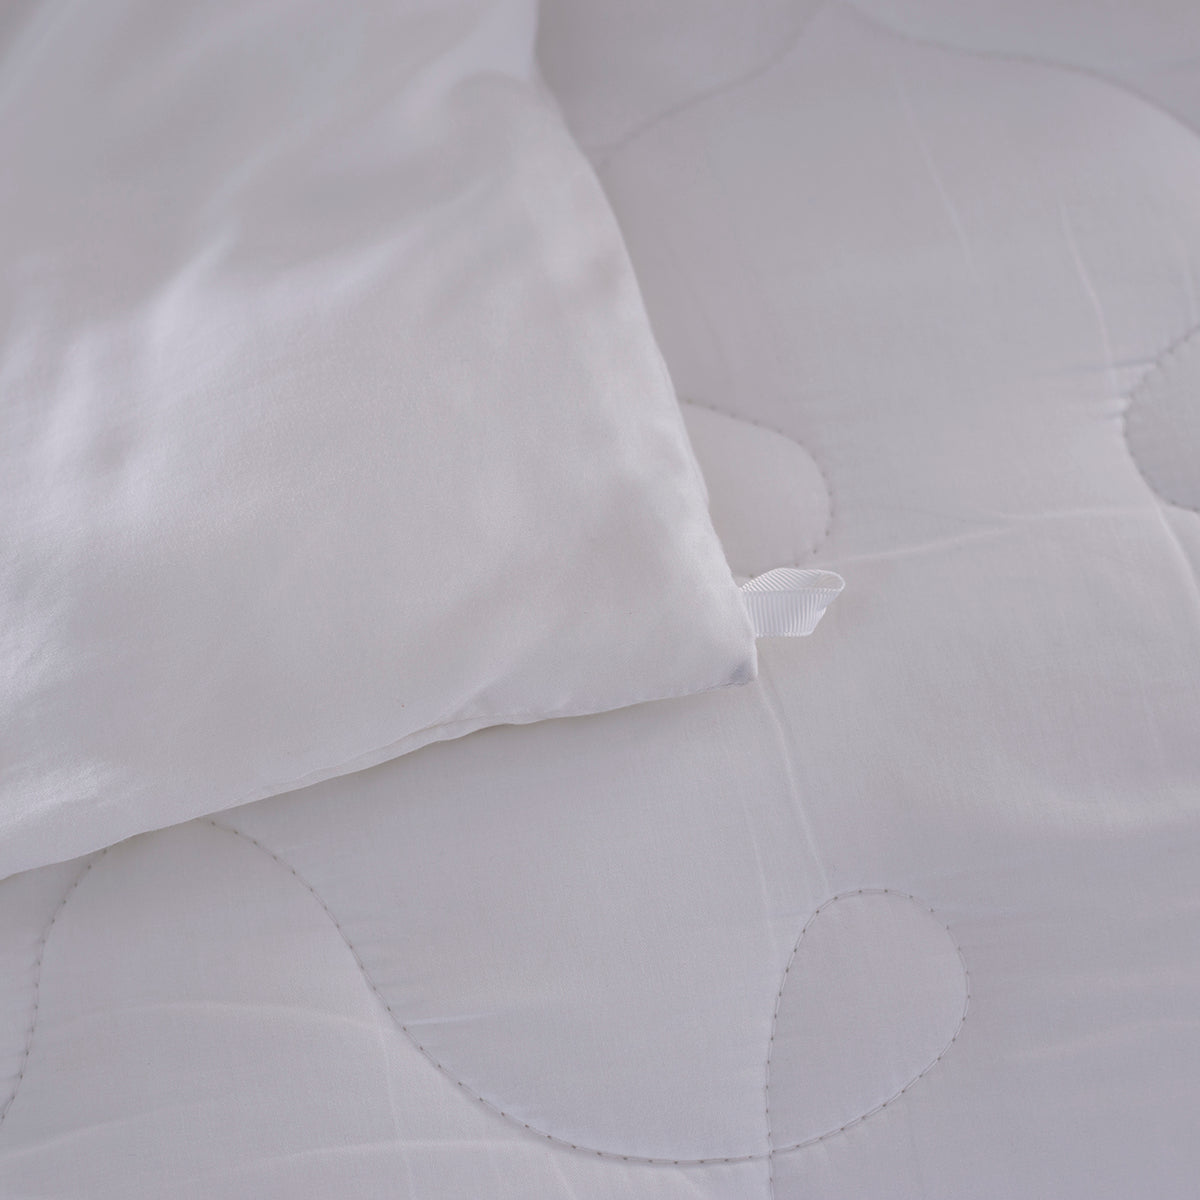 Diamonique Excel Fabric Winter Light Weight Super Soft & Plush Duvet Insert/Quilt